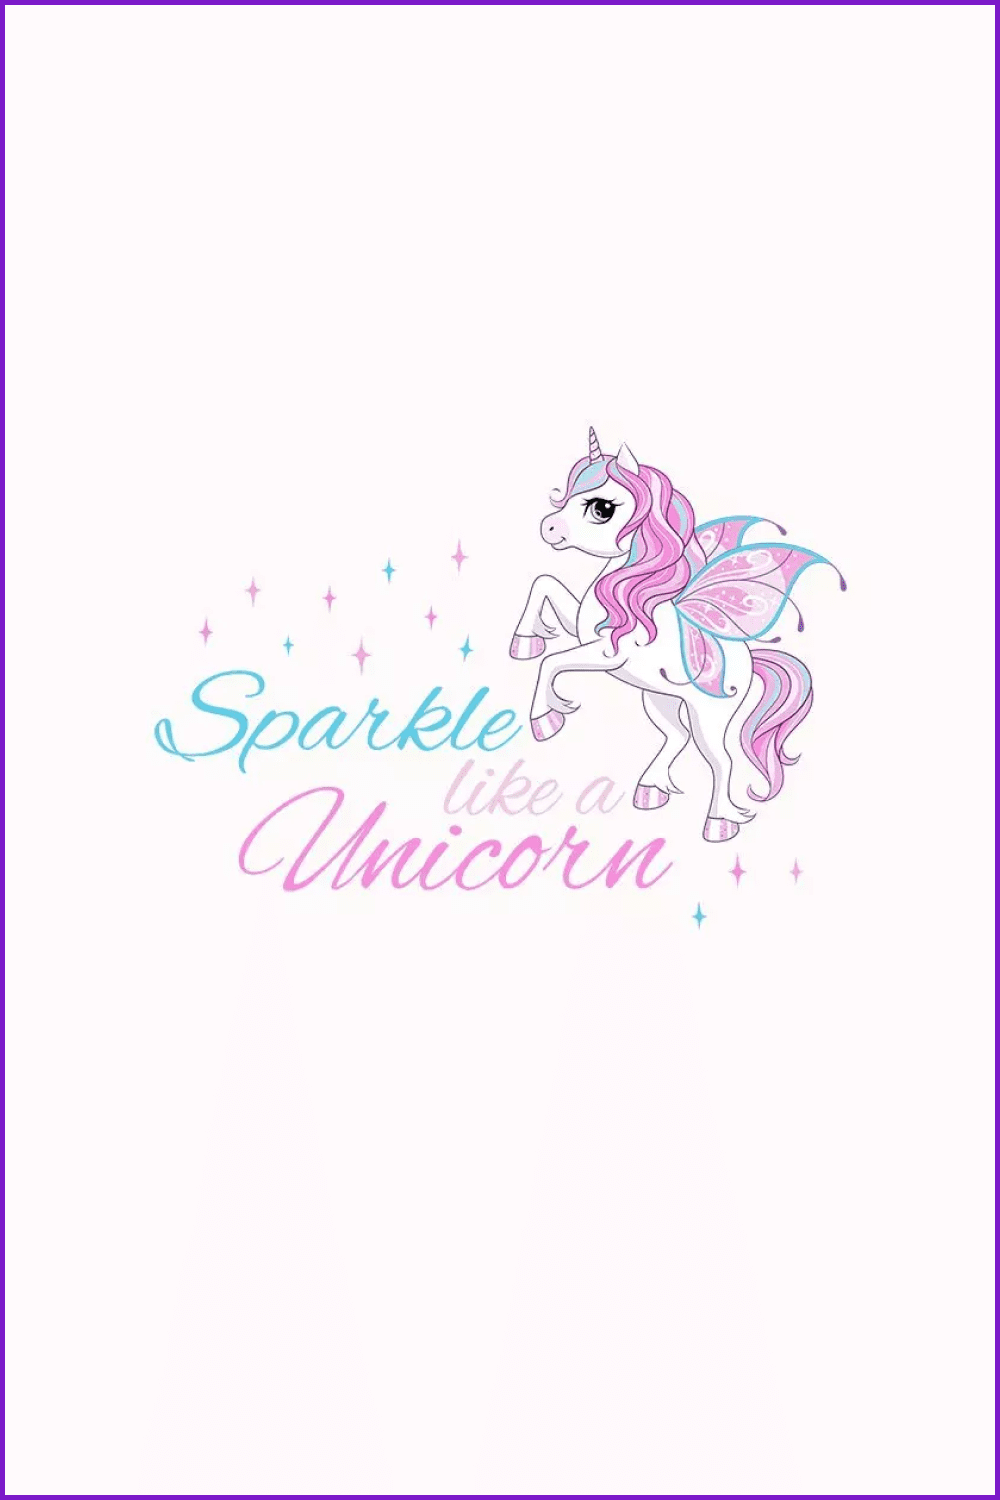 Cartoon smiling unicorn.